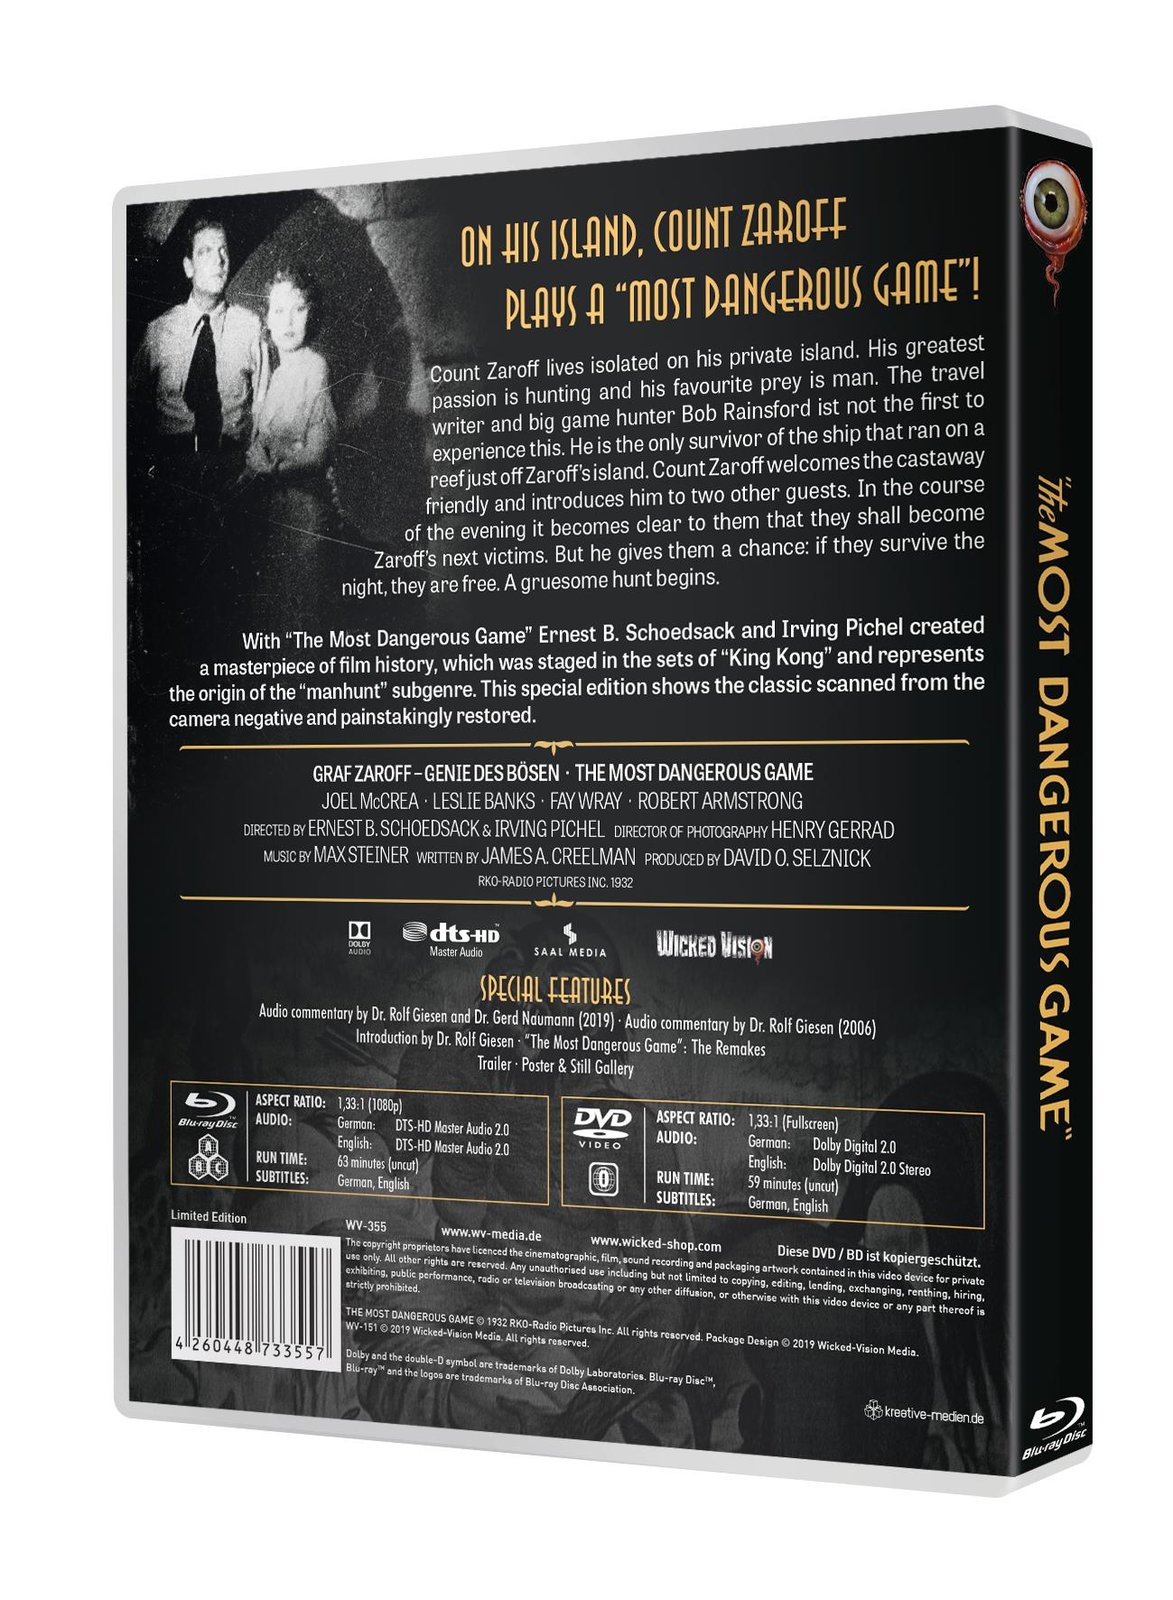 Graf Zaroff - Genie des Bösen - Uncut Edition (DVD+blu-ray)